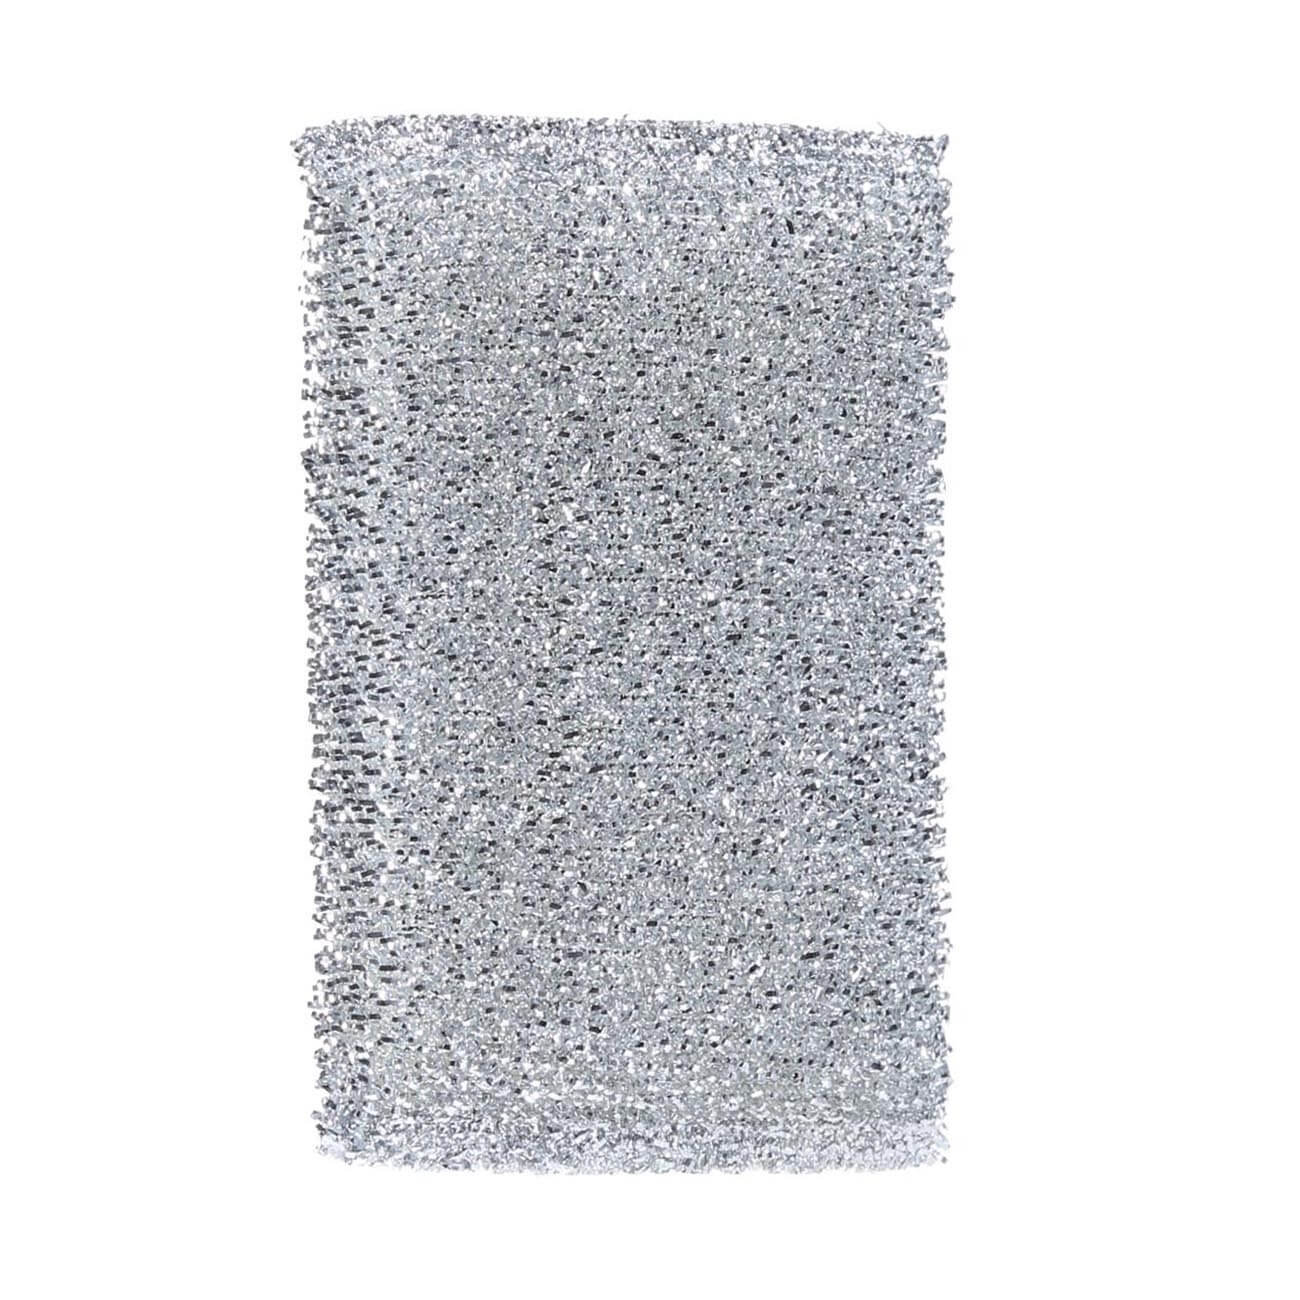 Sponge for washing dishes, 12x8 cm, dacron, silver, Clean изображение № 1